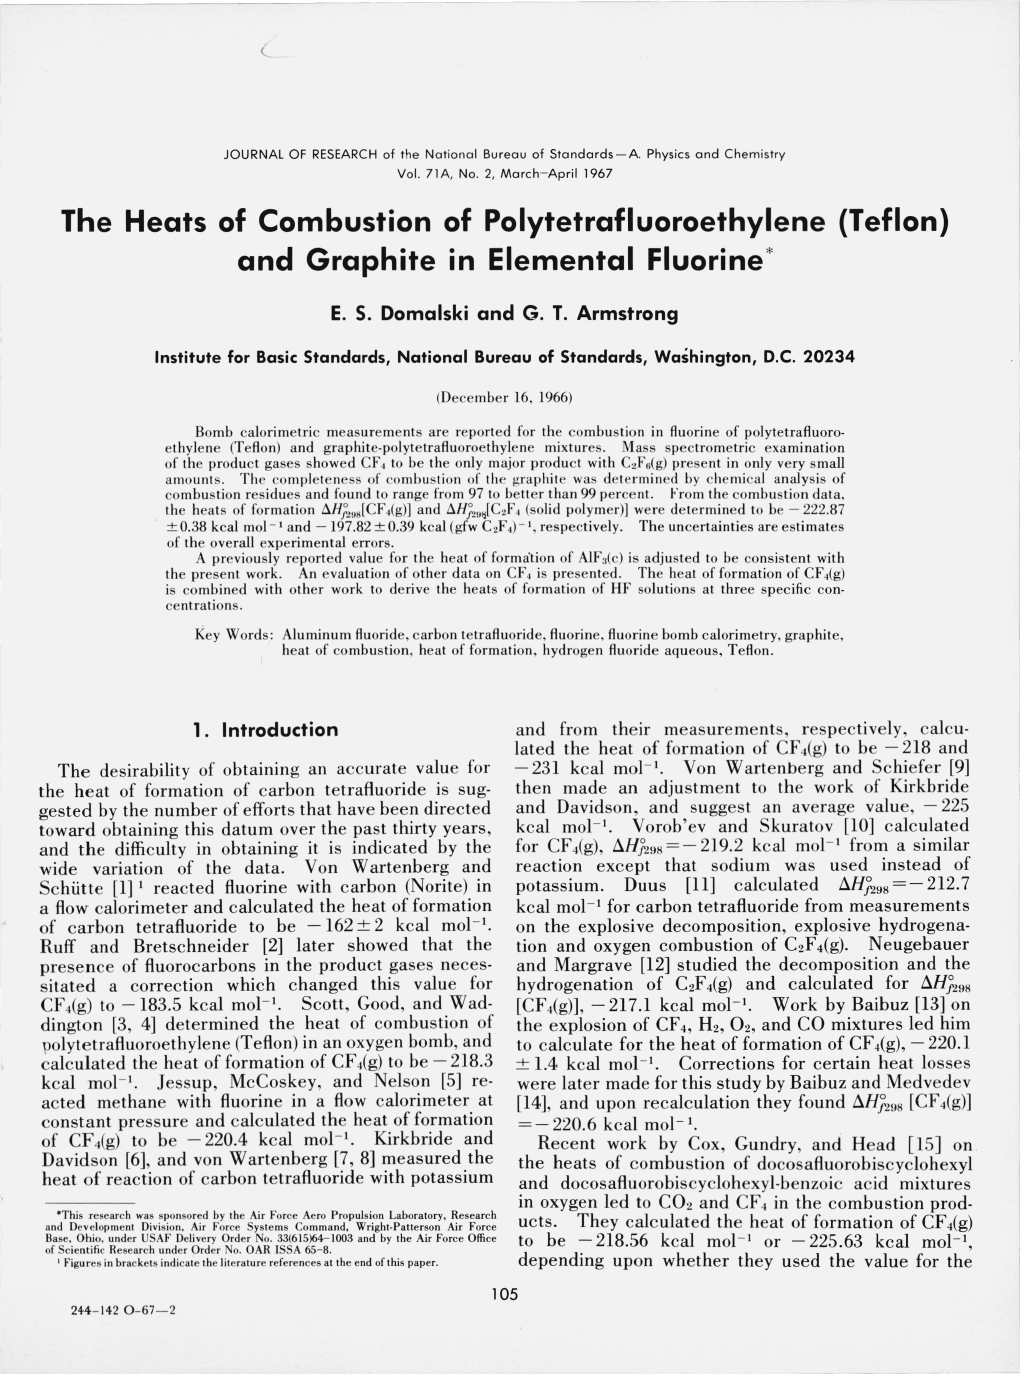 The Heats of Combustion of Polytetrafluoroethylene (Teflon) and Graphite in Elemental Fluorine *